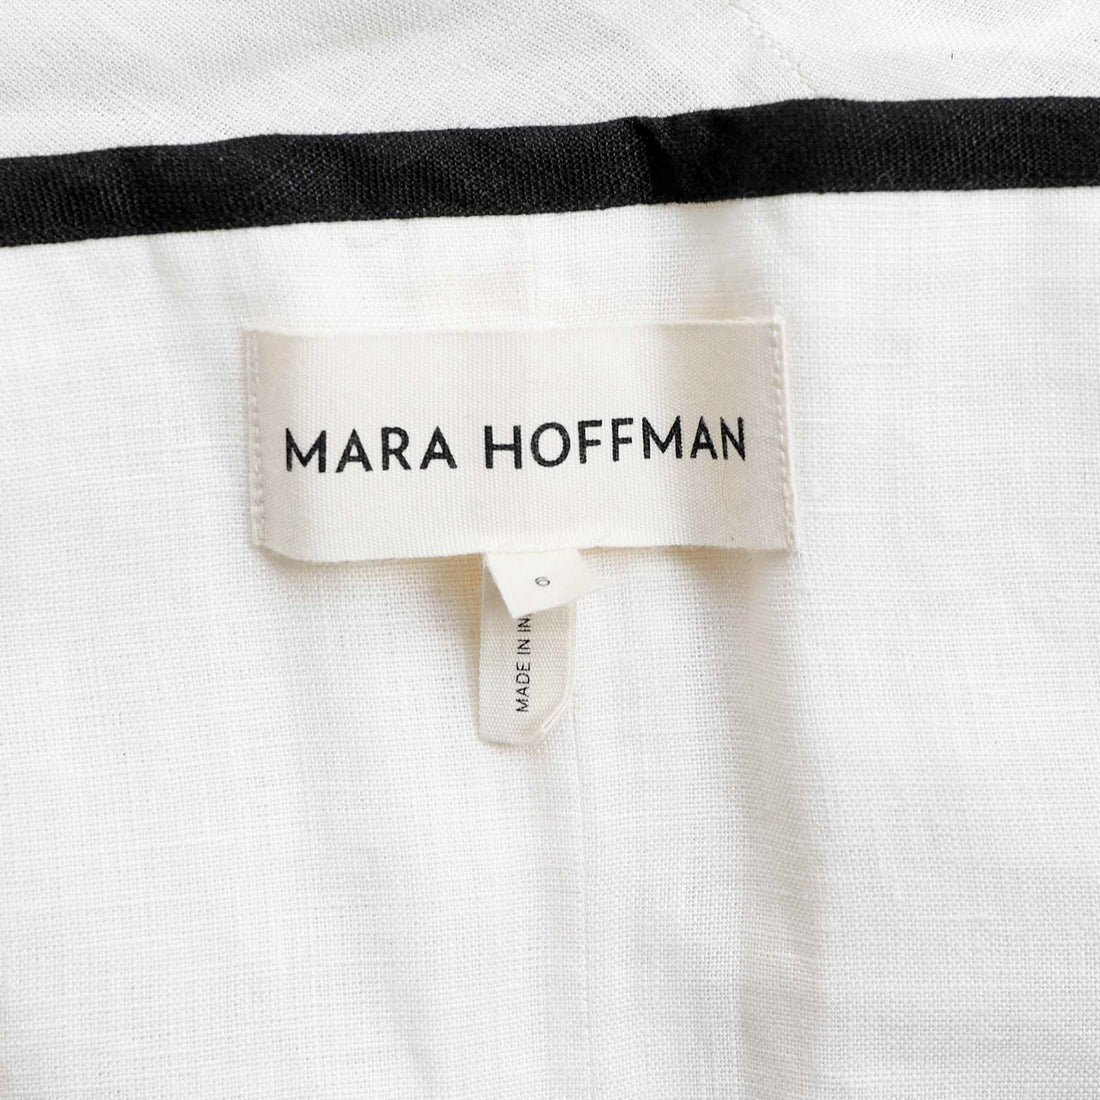 Mara Hoffman corset